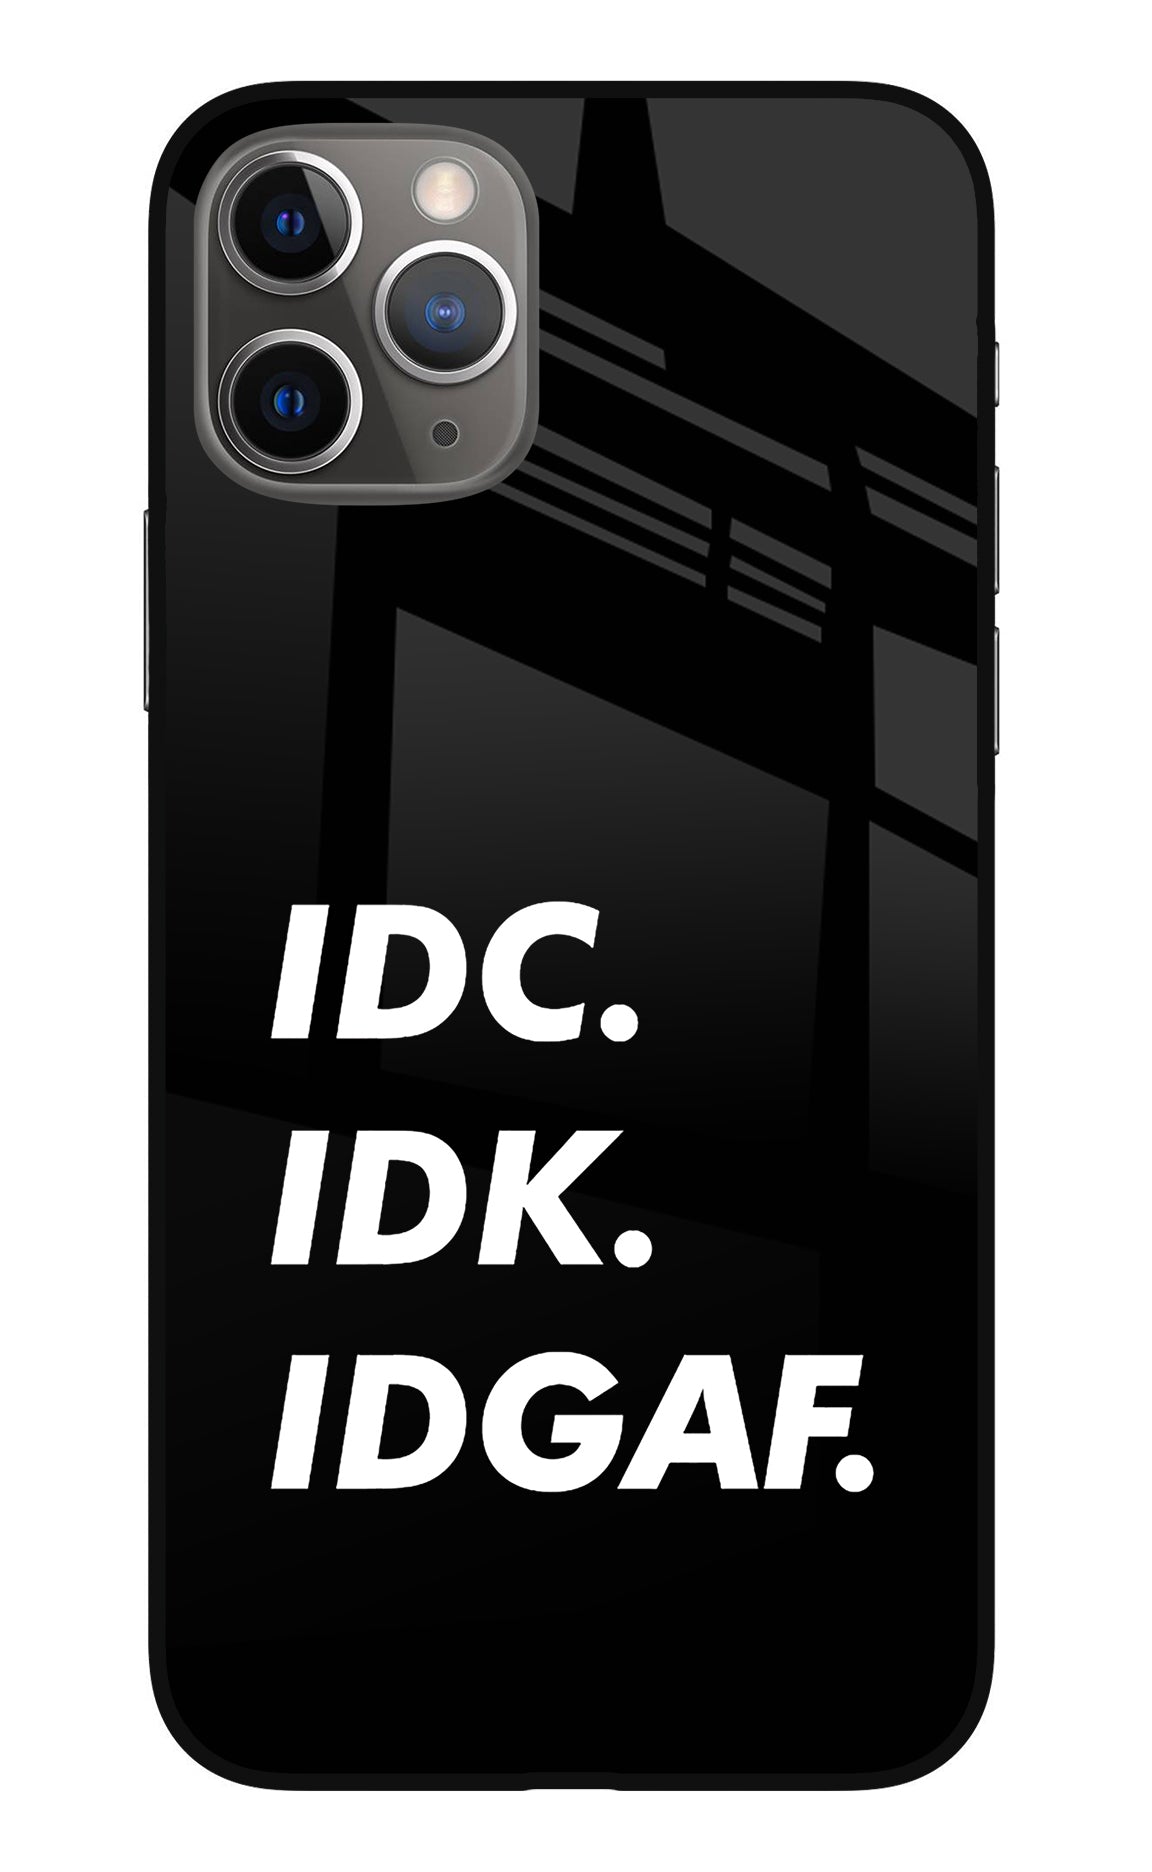 Idc Idk Idgaf iPhone 11 Pro Max Back Cover